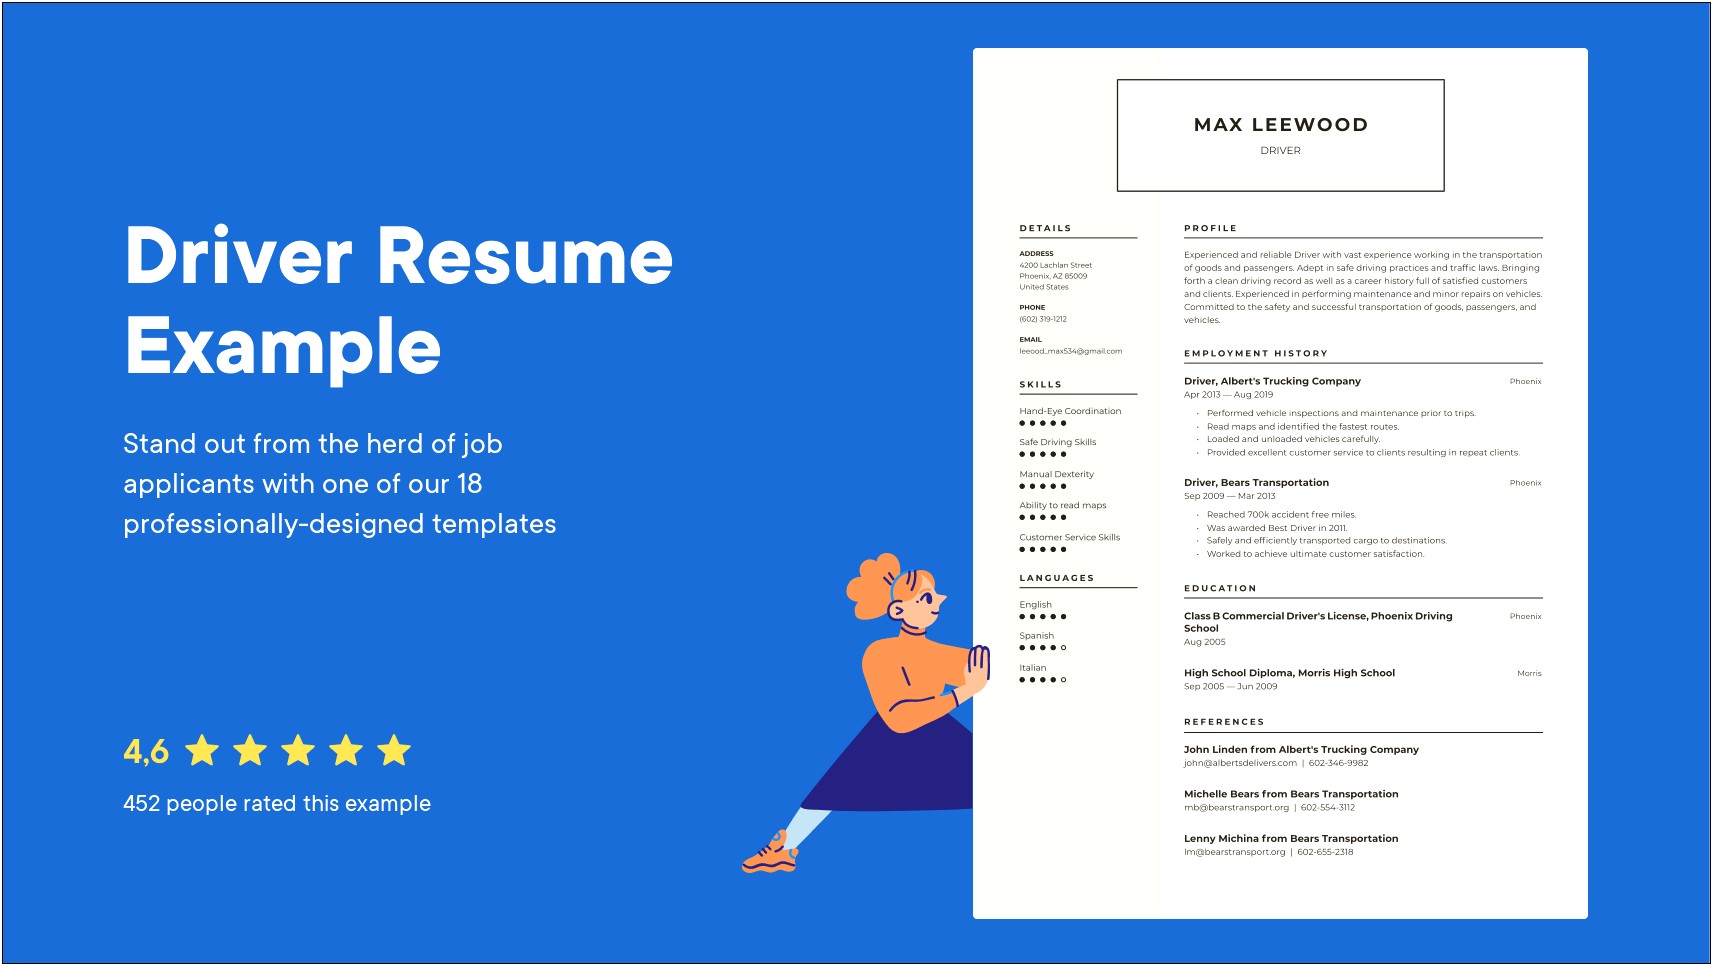 Driver Job Description For Resume